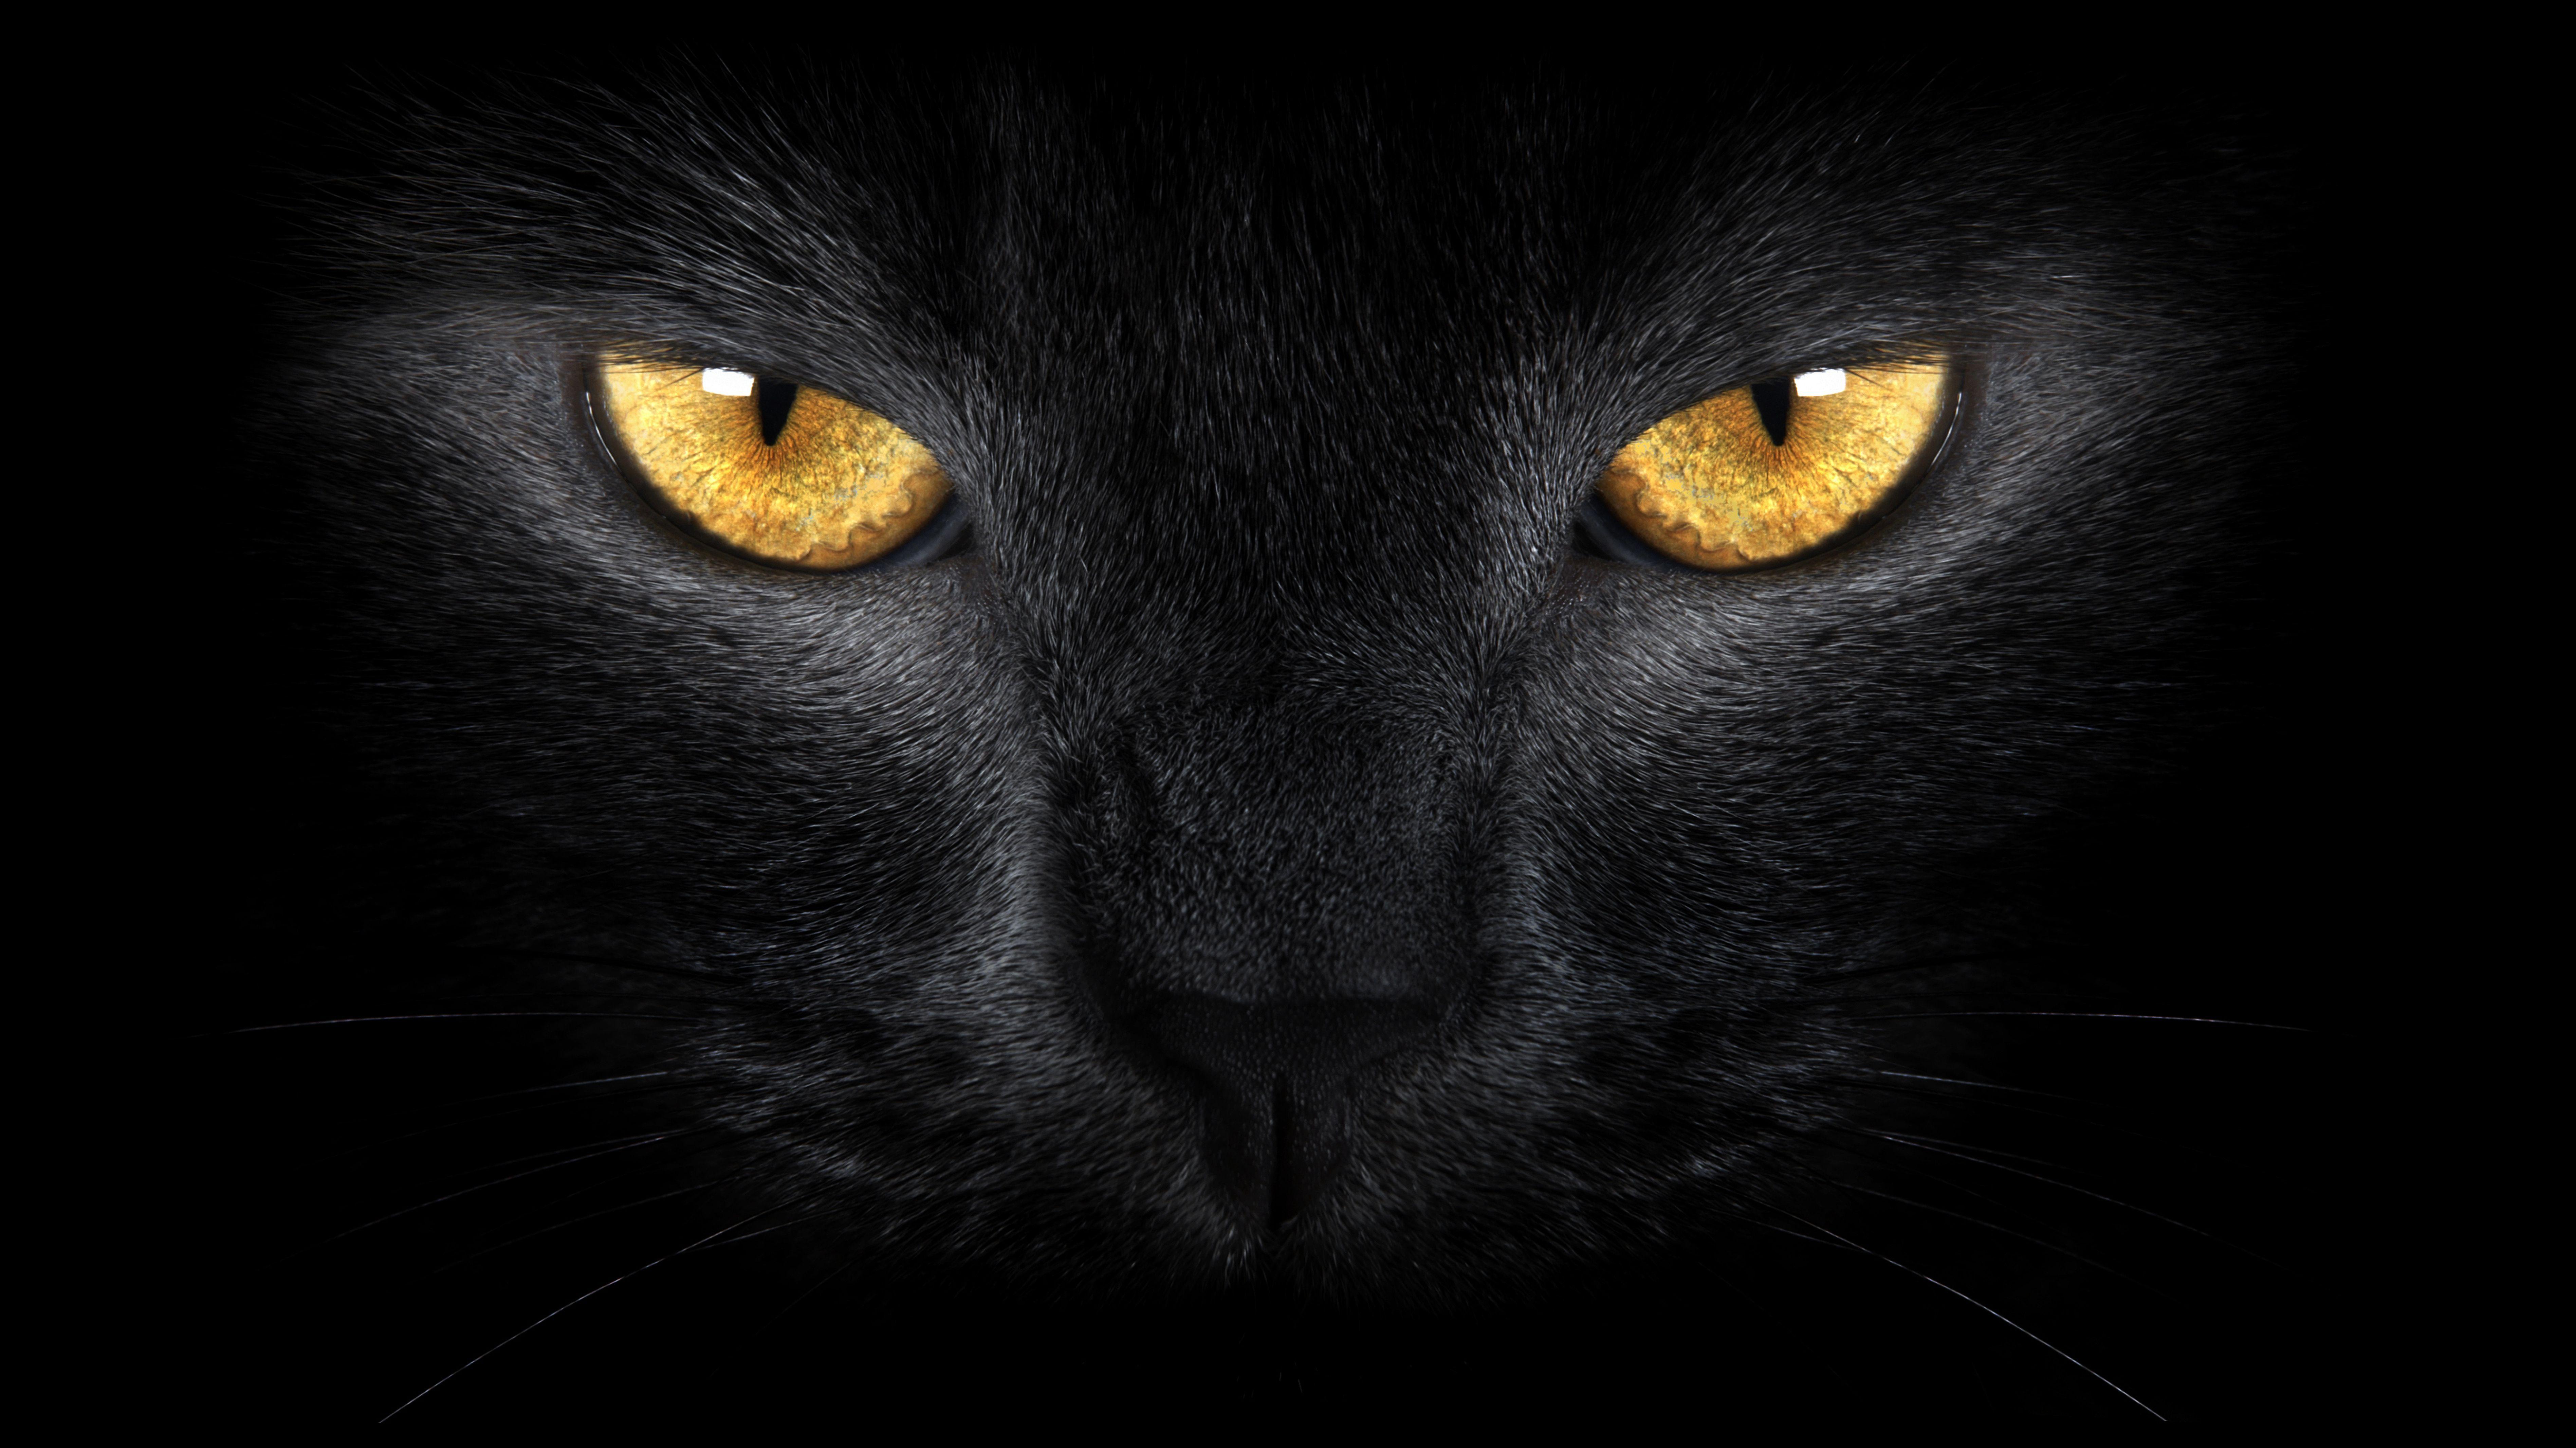 Black cat fire eyes fantasy wallpaper background  plingcom